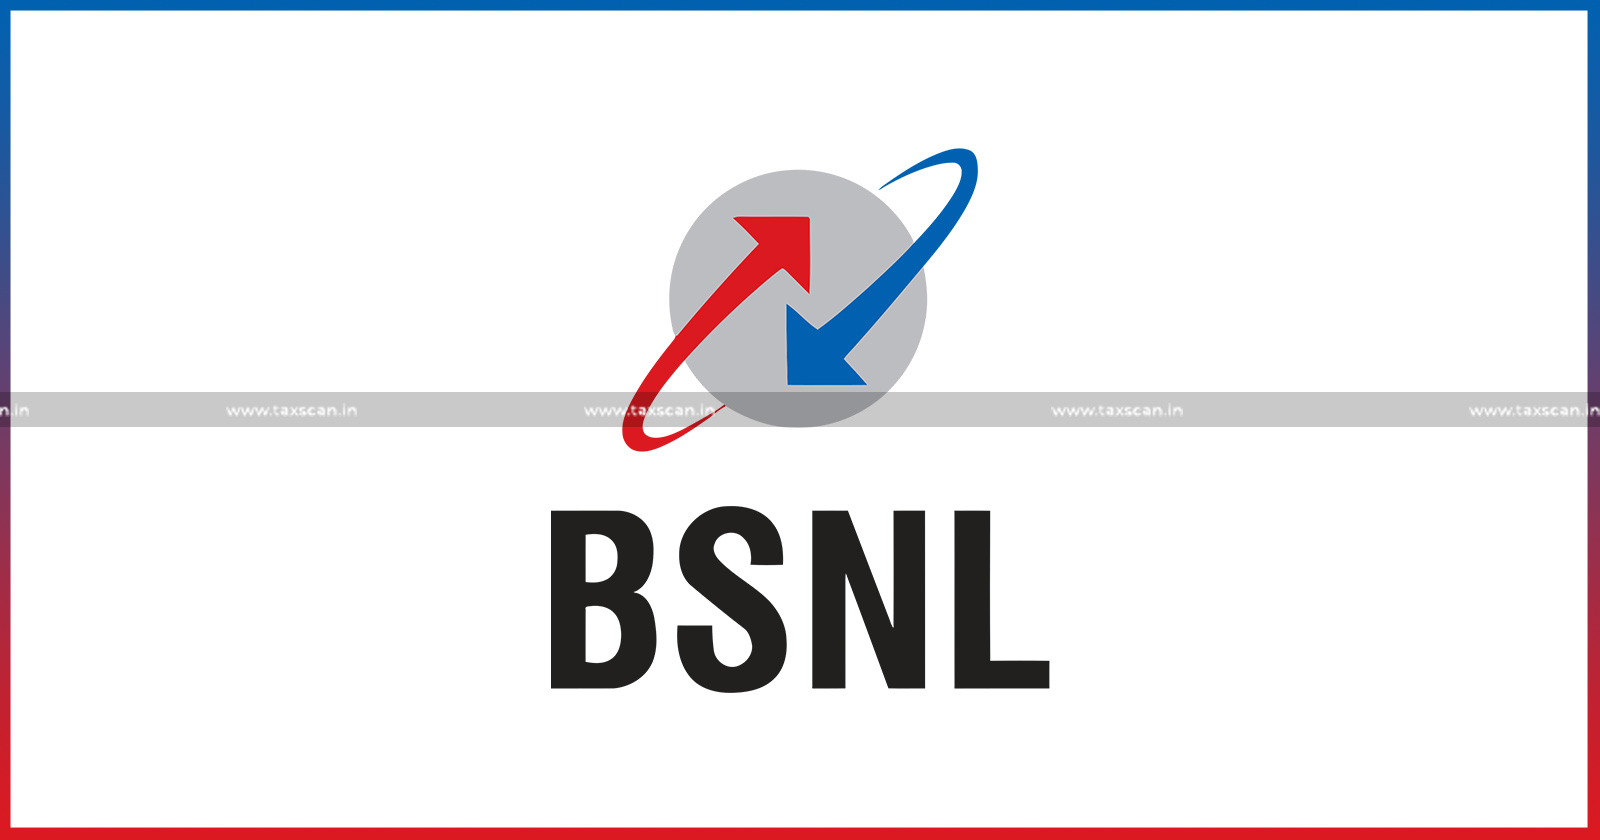 BSNL - CESTAT rules Cenvat Credit Denied - Procedural Inadequacies - TAXSCAN